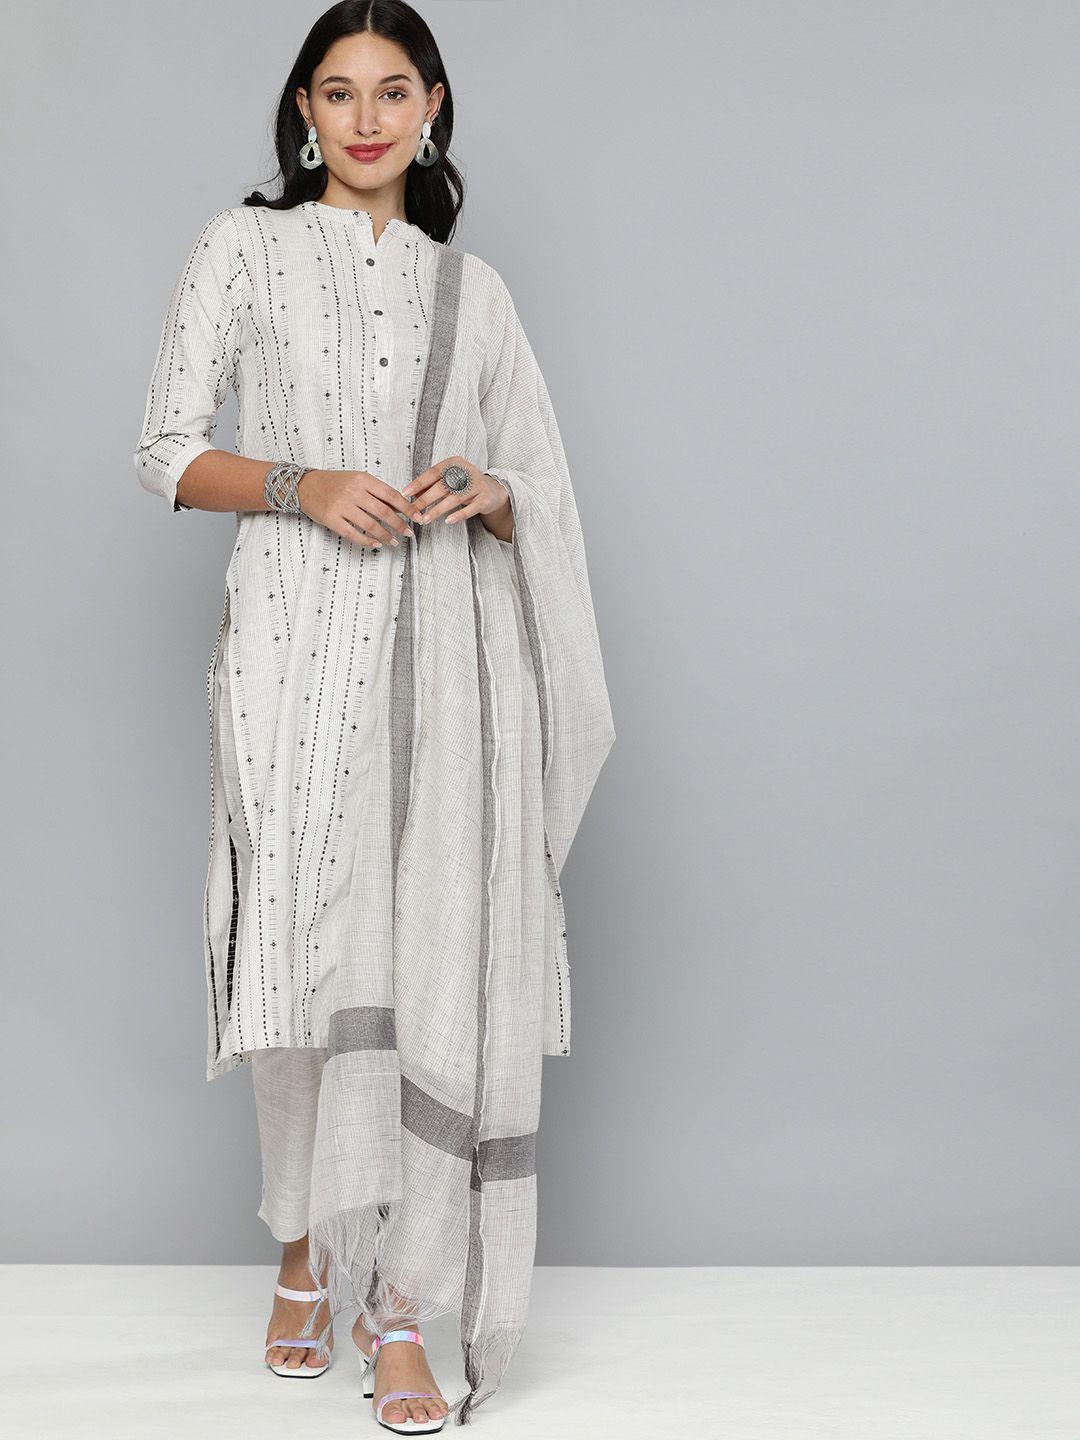 kvsfab white & grey ethnic motif patterned pure cotton unstitched dress material